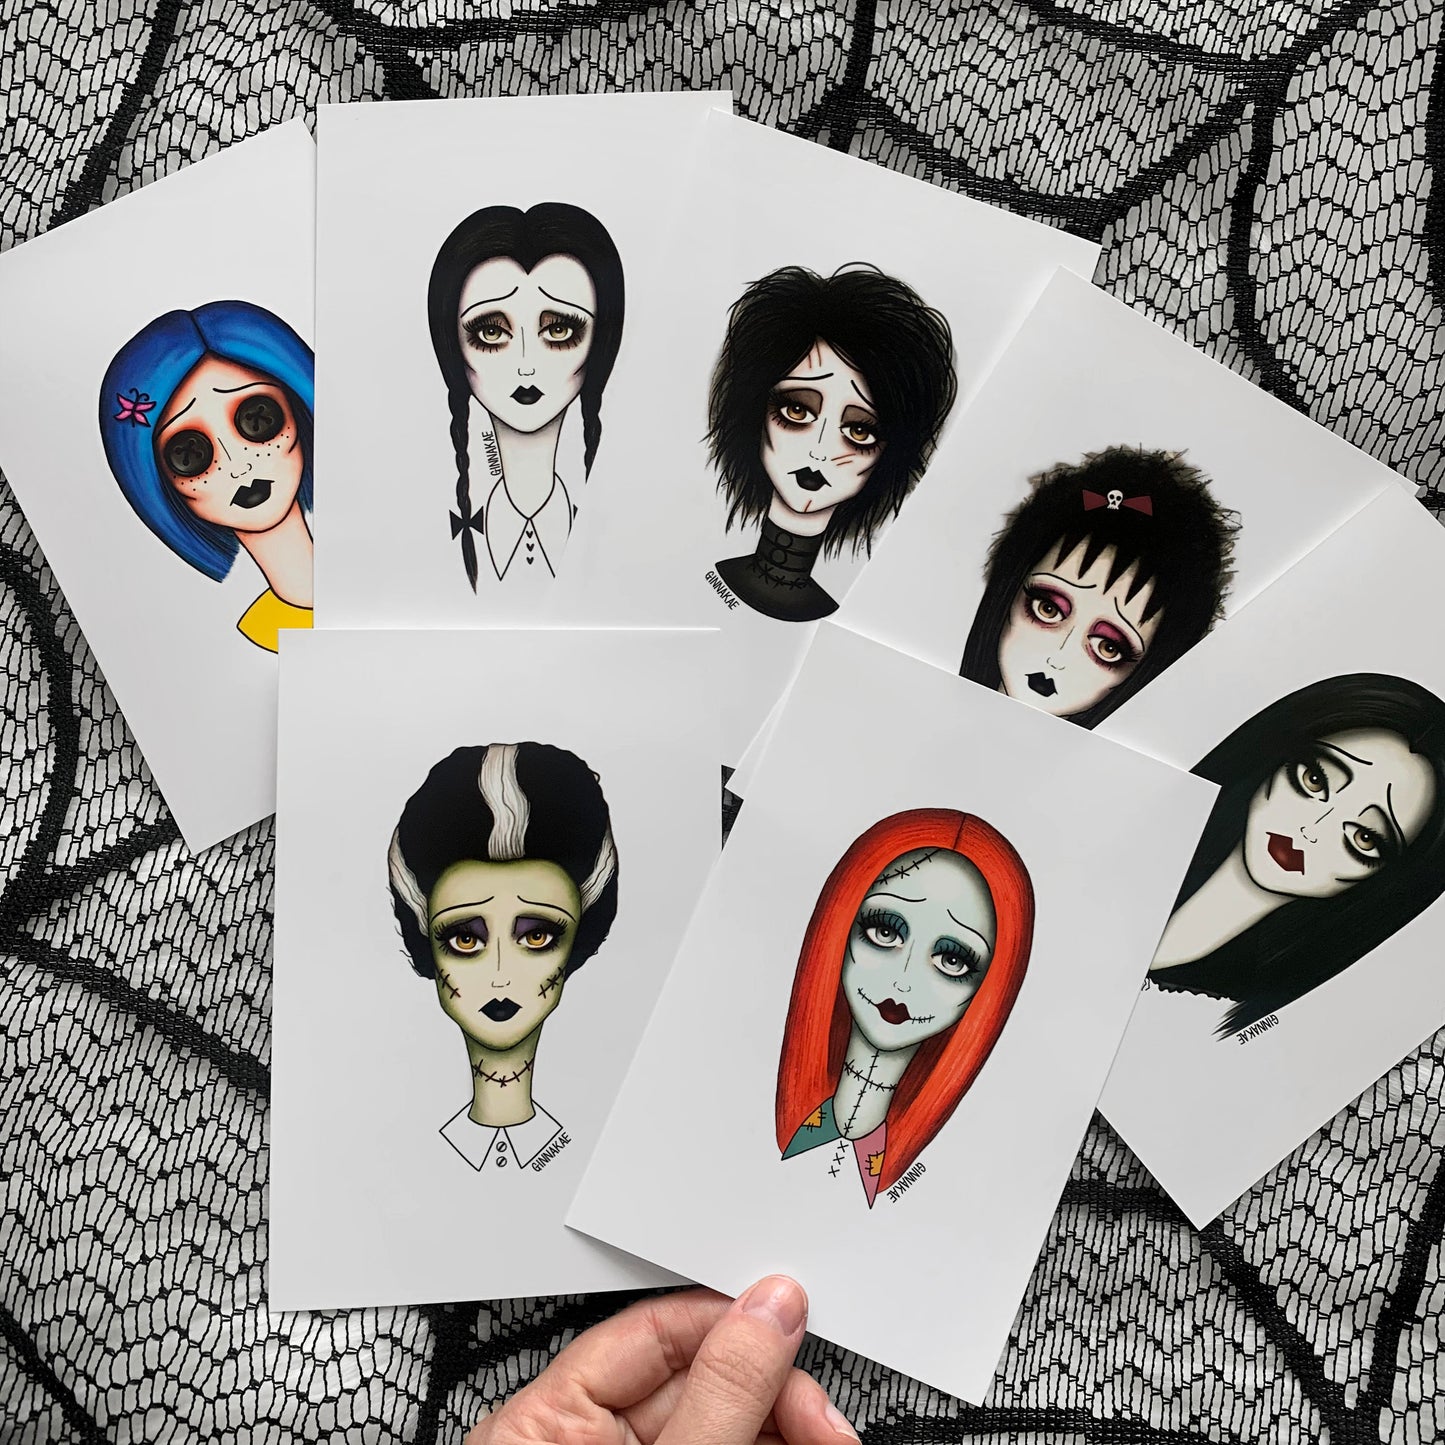 Spooky Girl Gang 4x6 Inch Prints